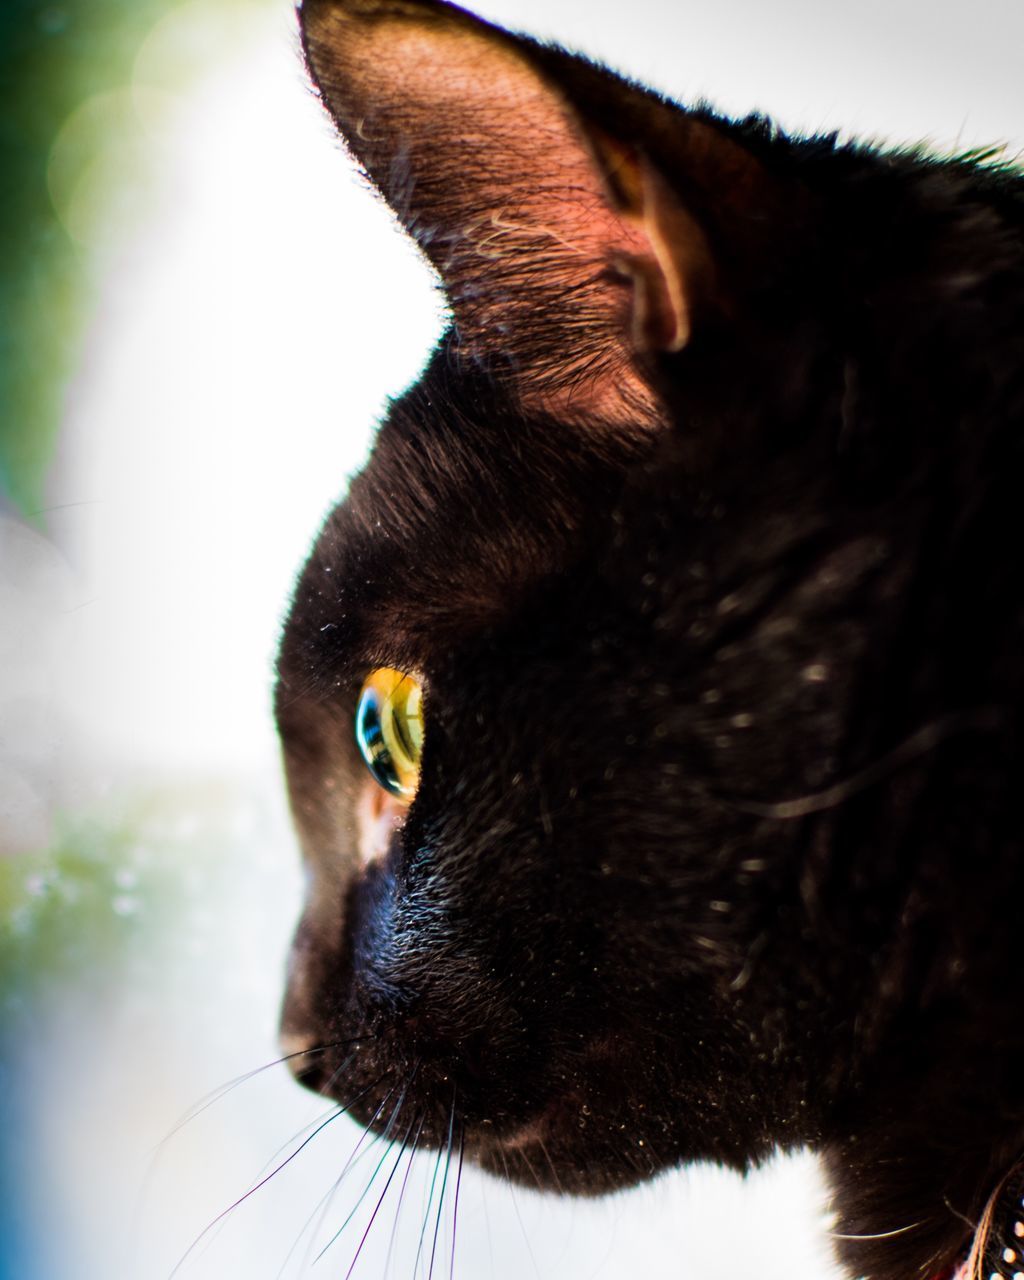 PORTRAIT OF BLACK CAT